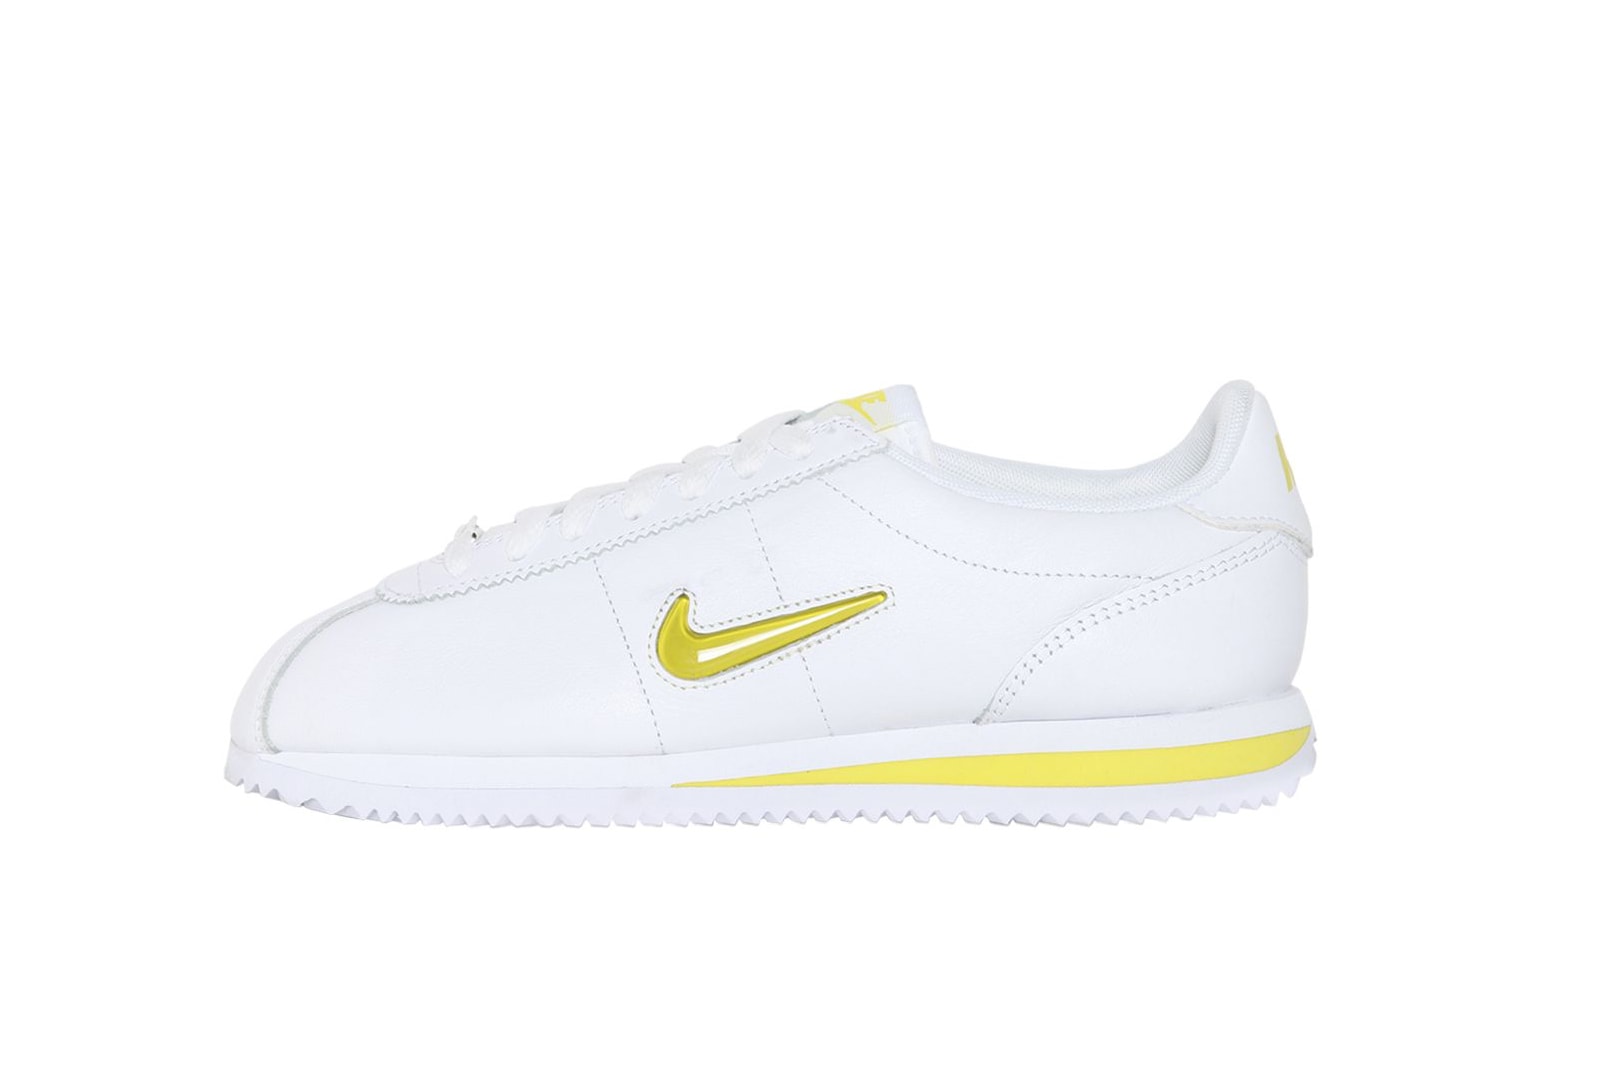 Nike Cortez Jewel in White/Yellow Spring Colorway Fresh Crisp Minimal Trainer Sneaker